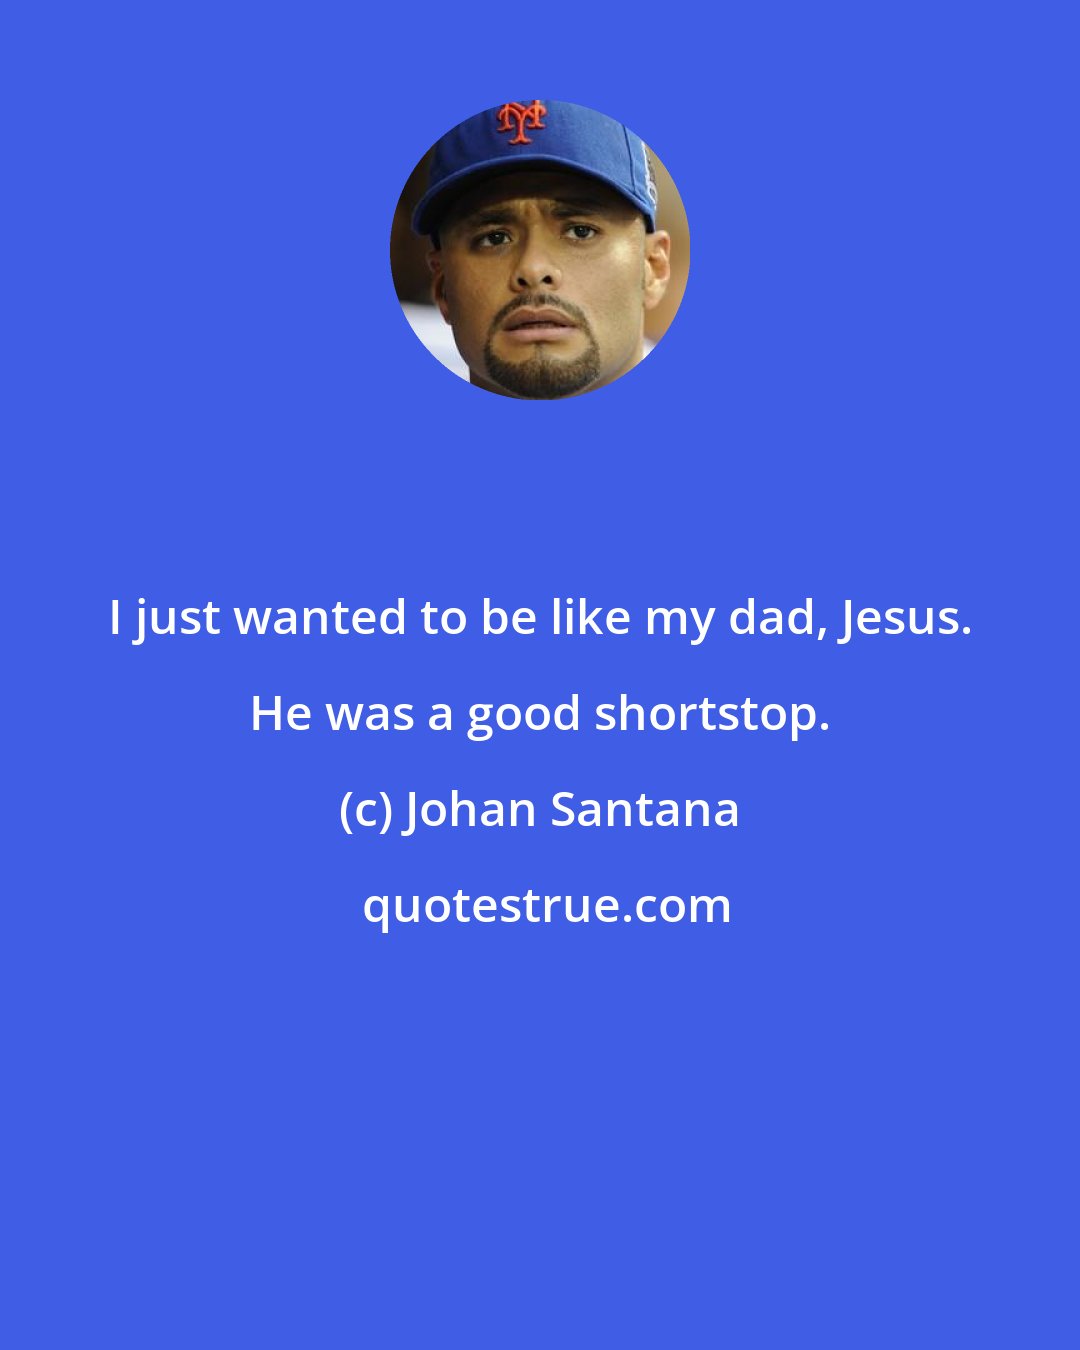 Johan Santana: I just wanted to be like my dad, Jesus. He was a good shortstop.